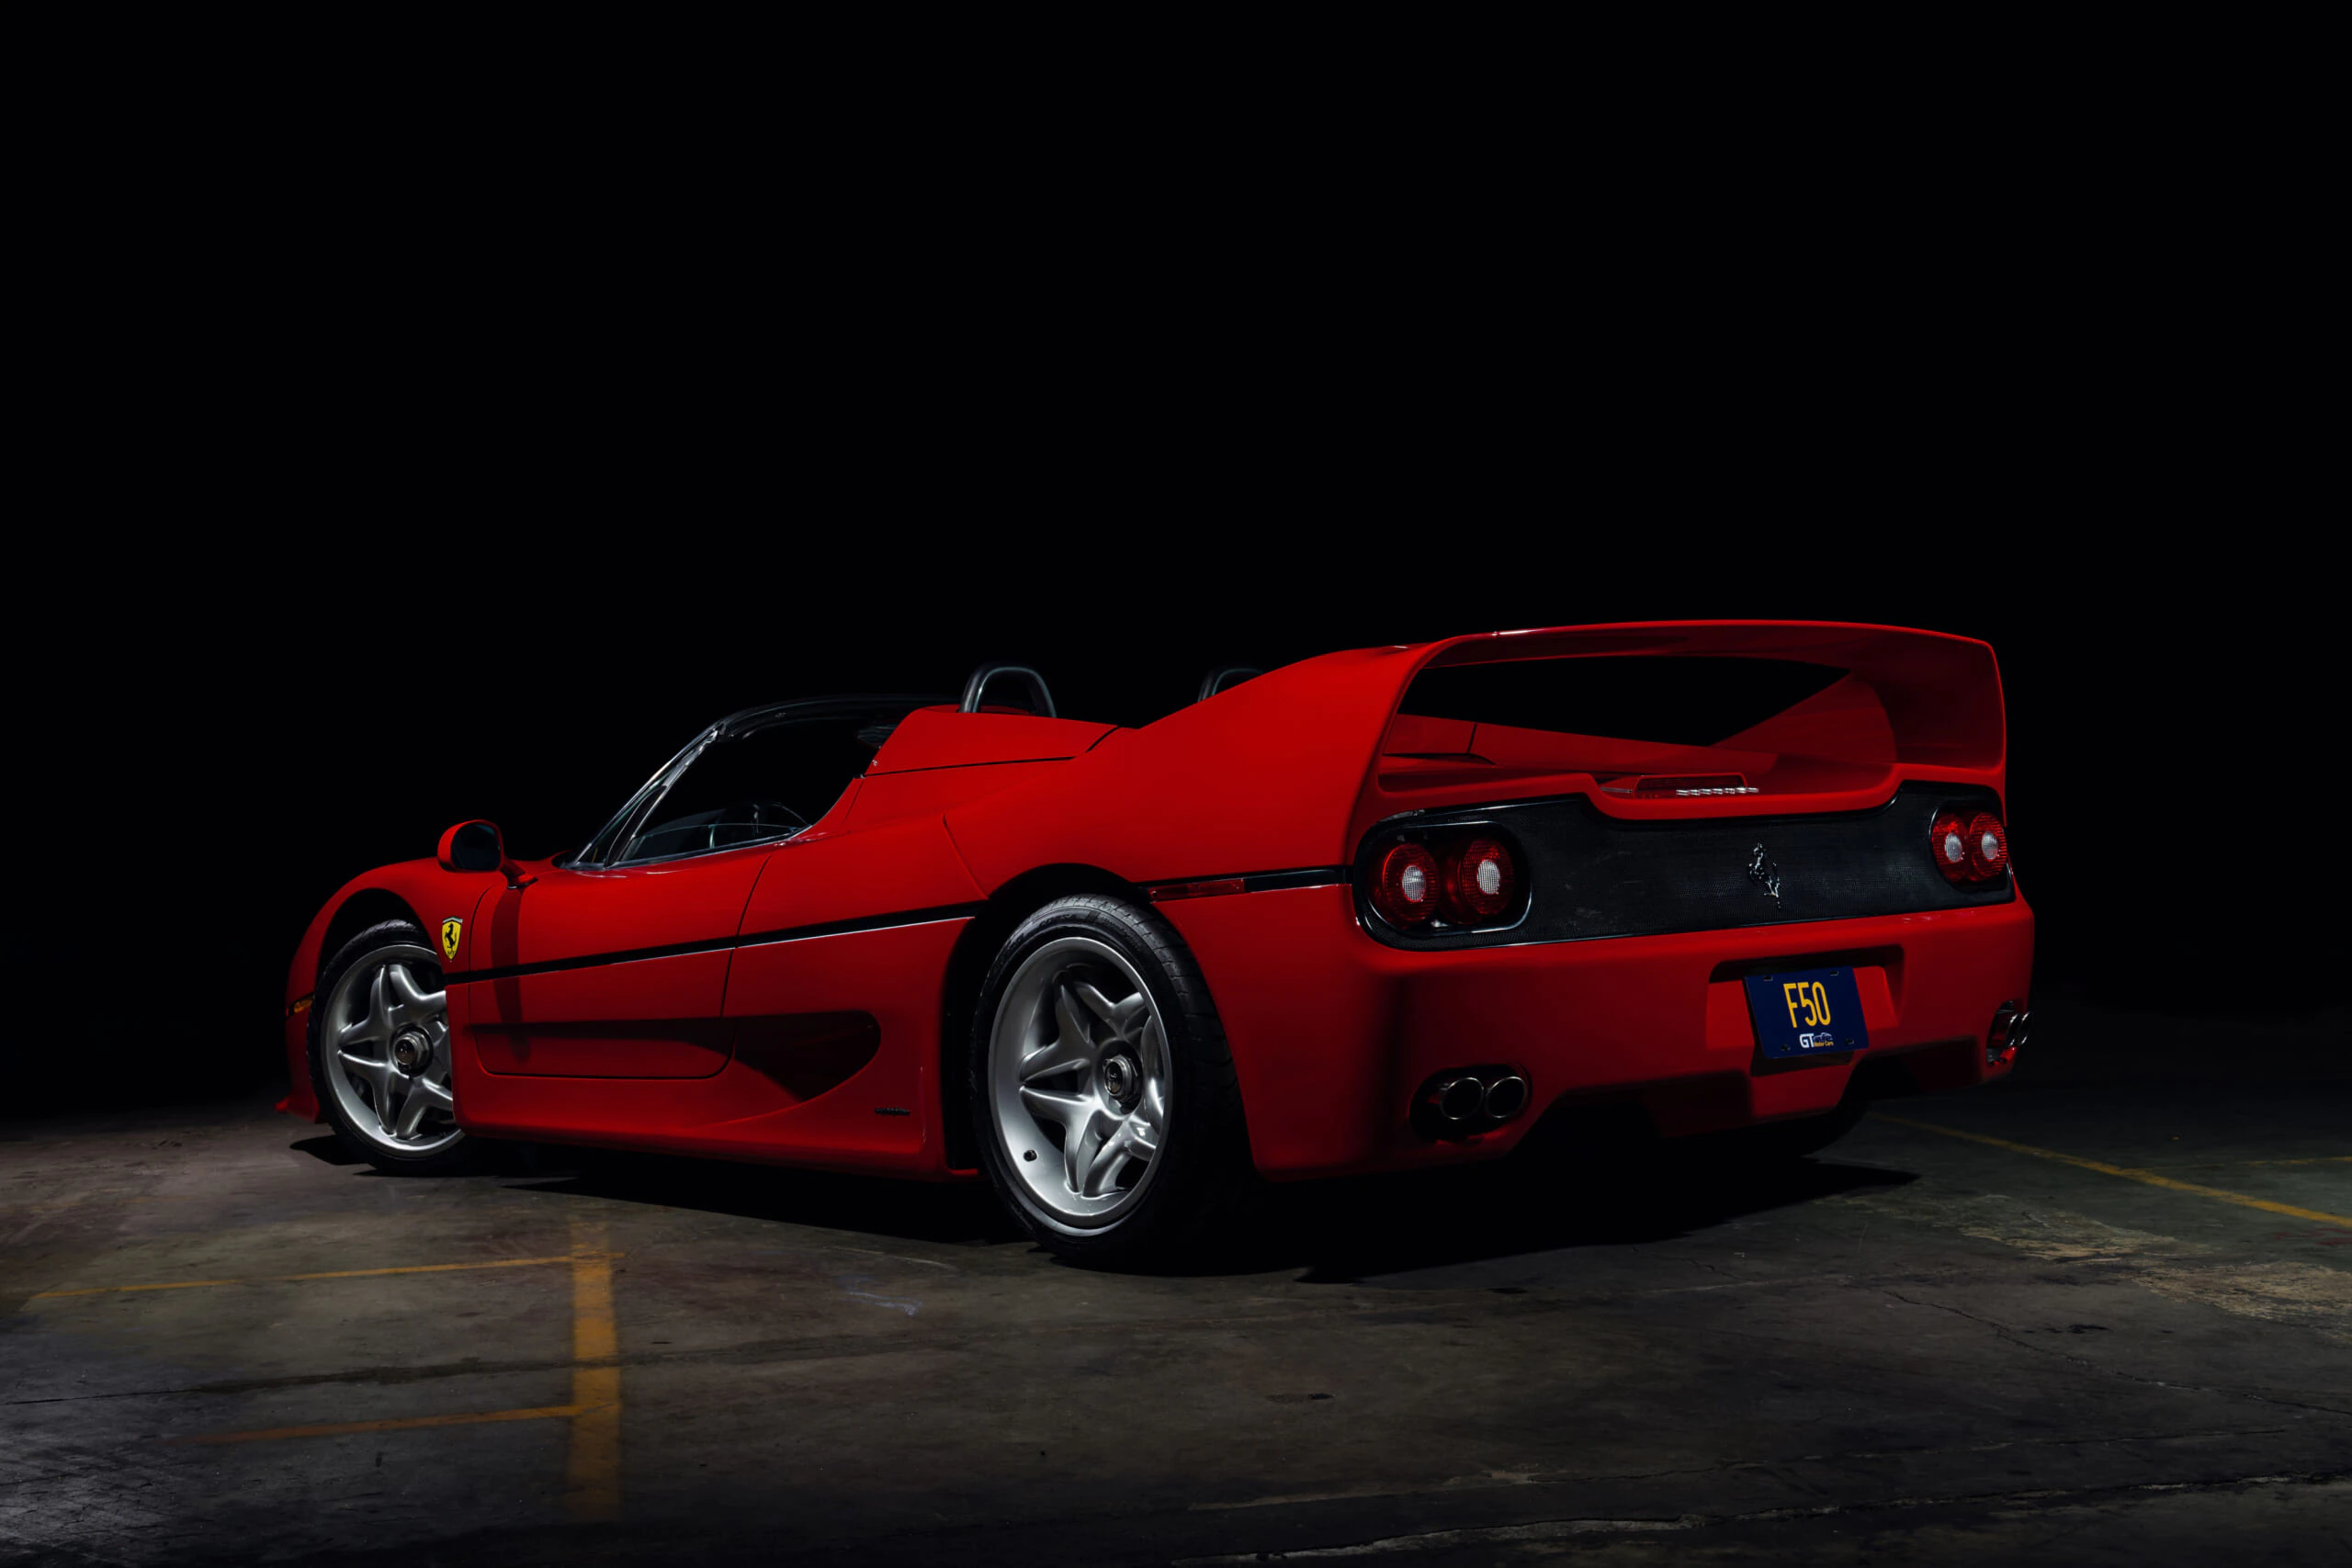 Ferrari F50 ultimate hypercars